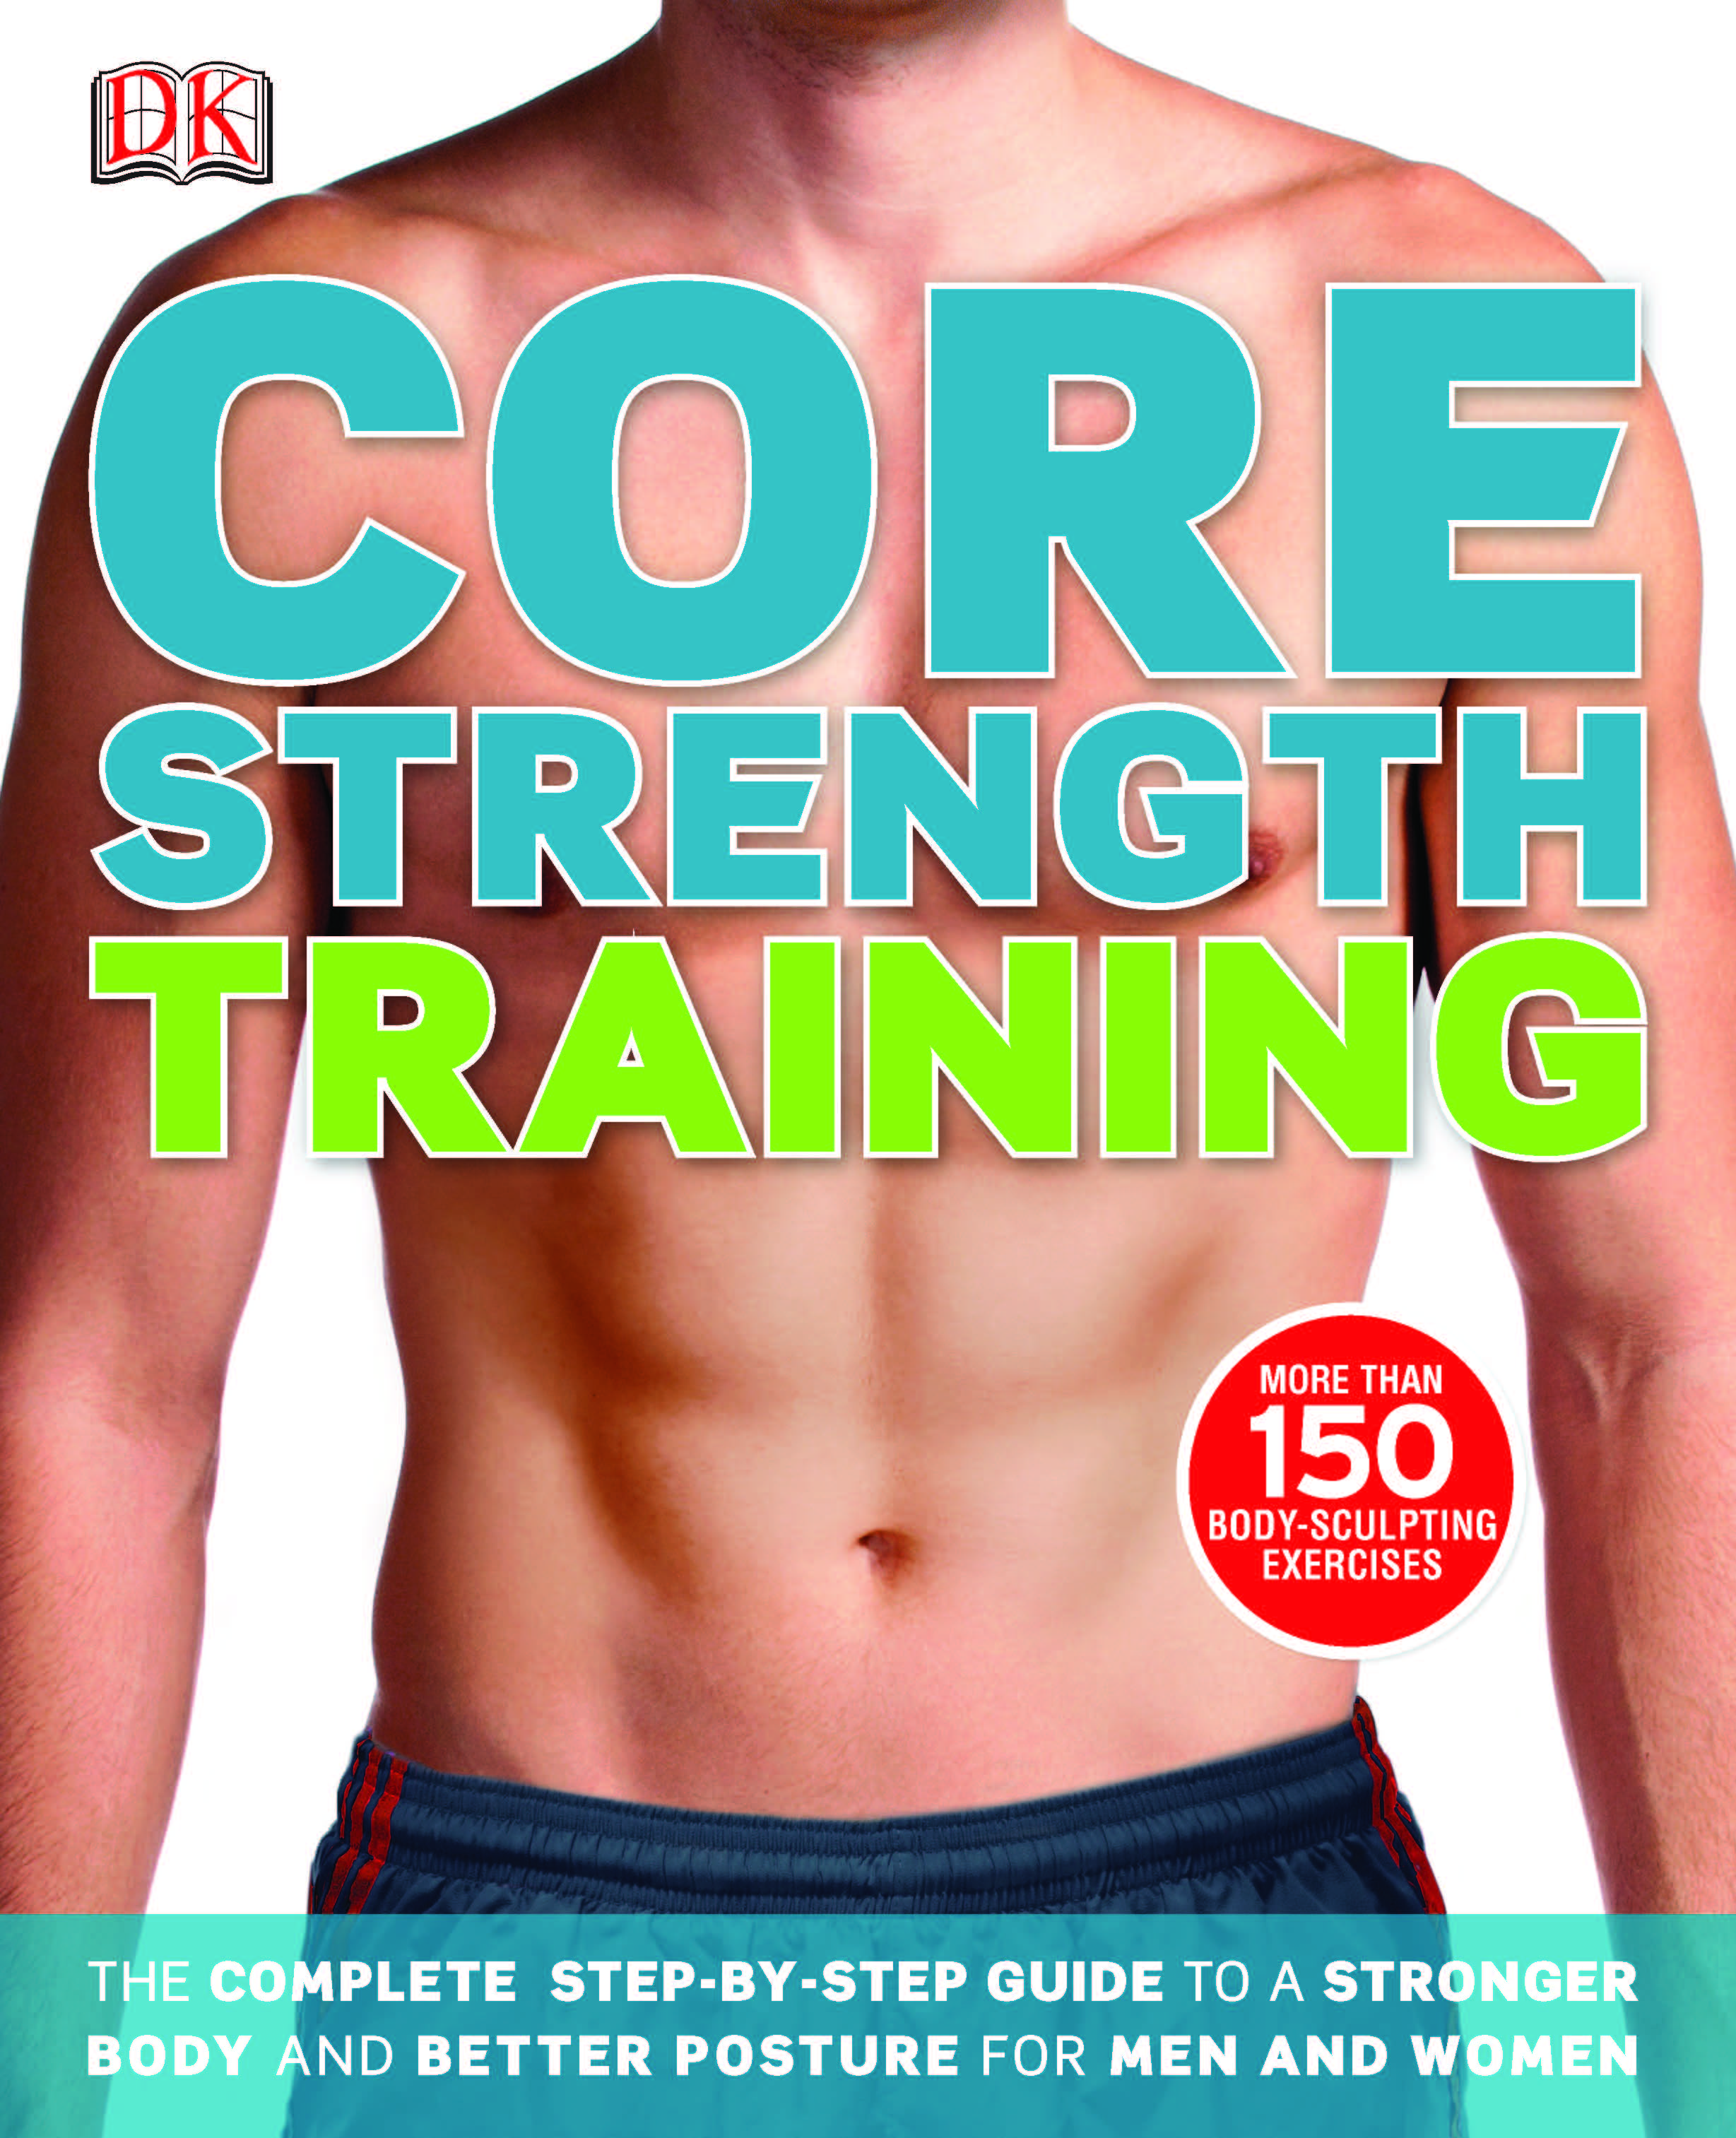 Core Strength Training